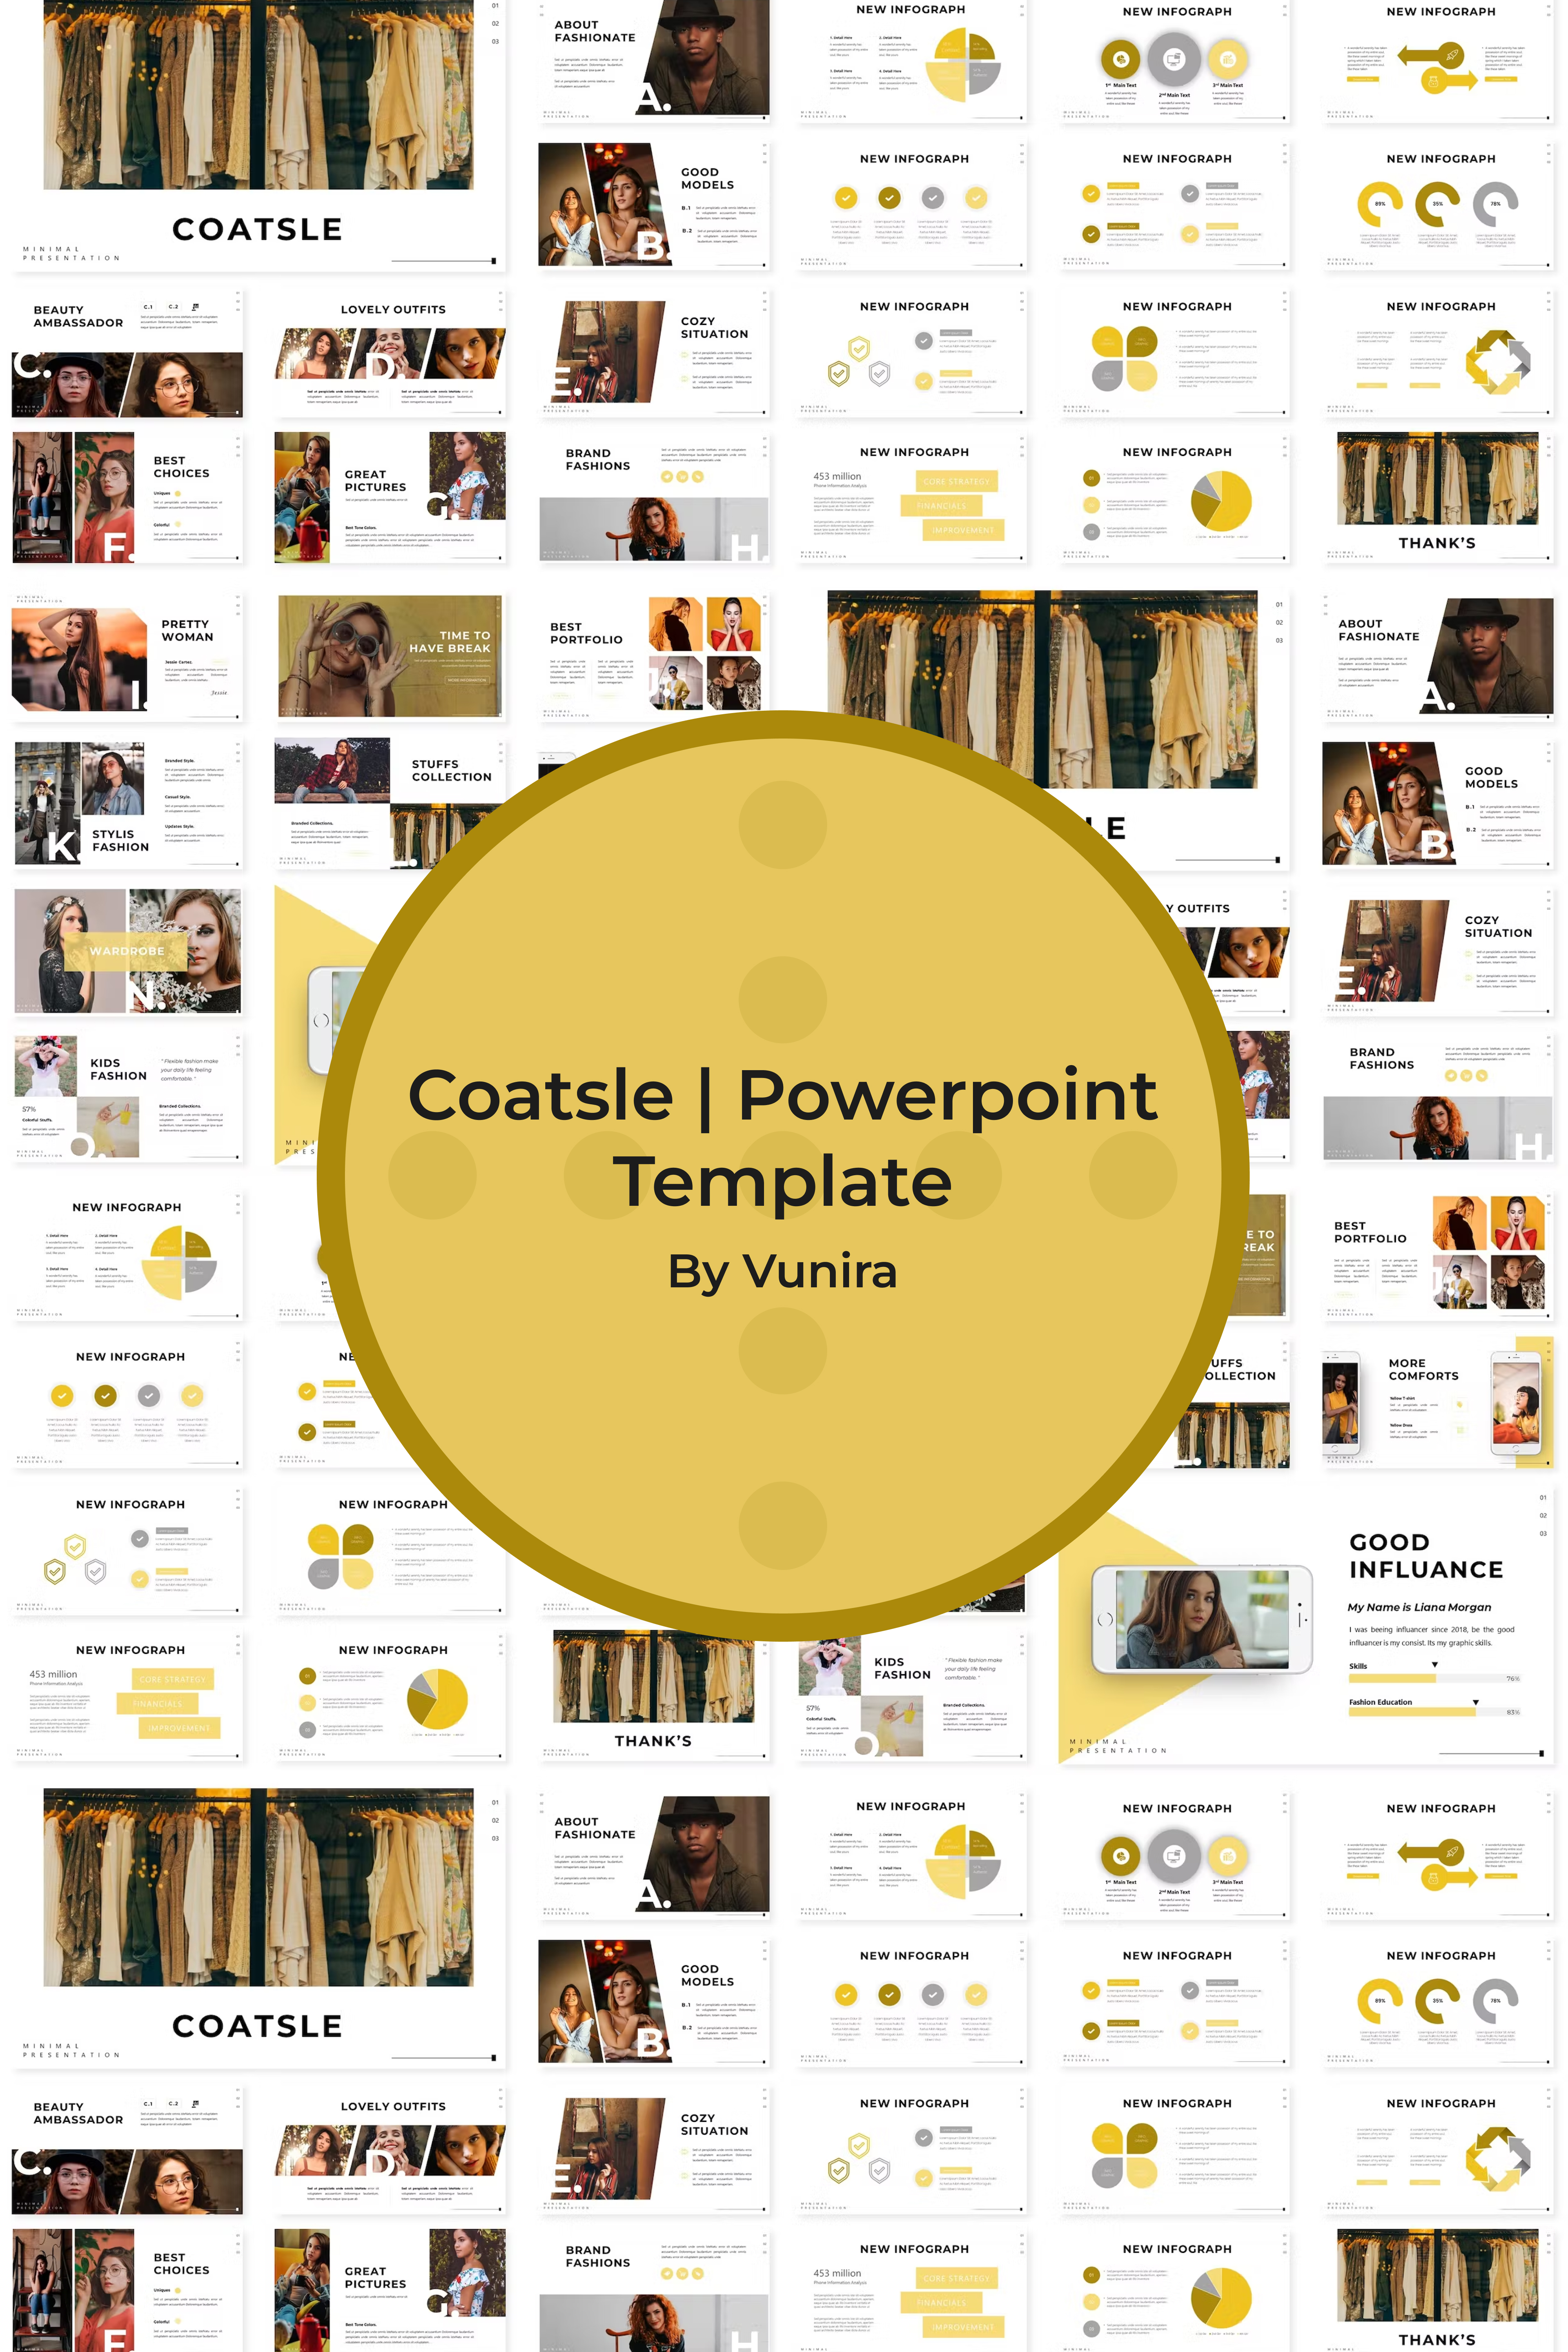 Coatsle powerpoint template of pinterest.